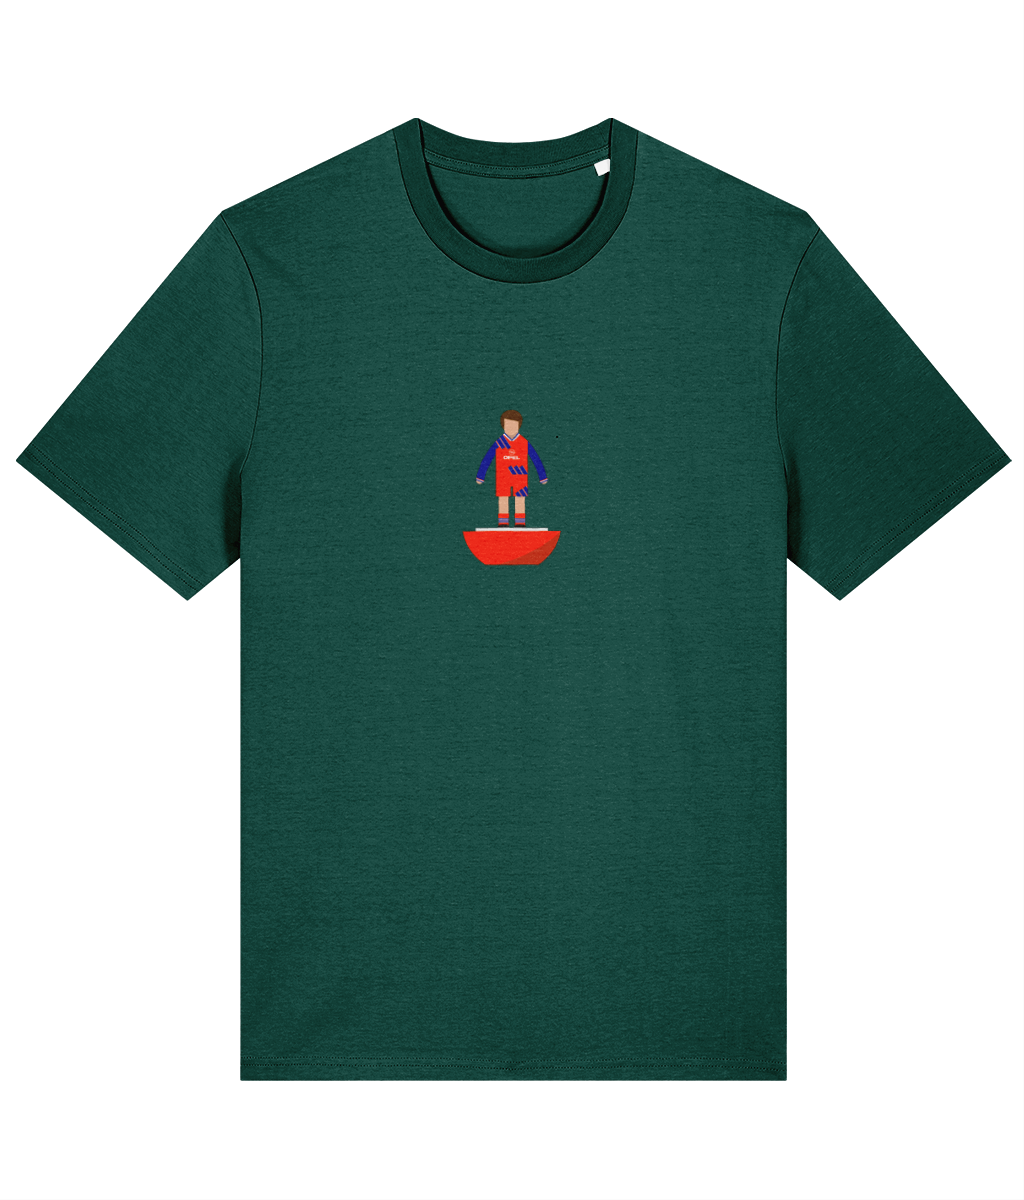 Football Kits 'Bayern 1993' Unisex T-Shirt